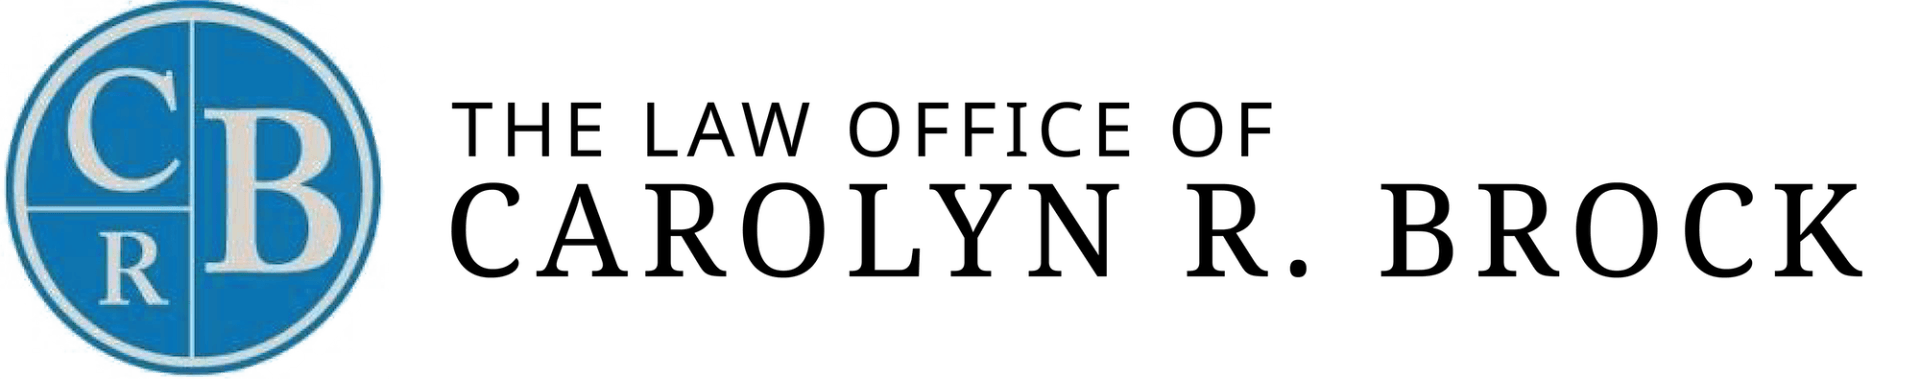 The Law Office of Carolyn R. Brock Logo